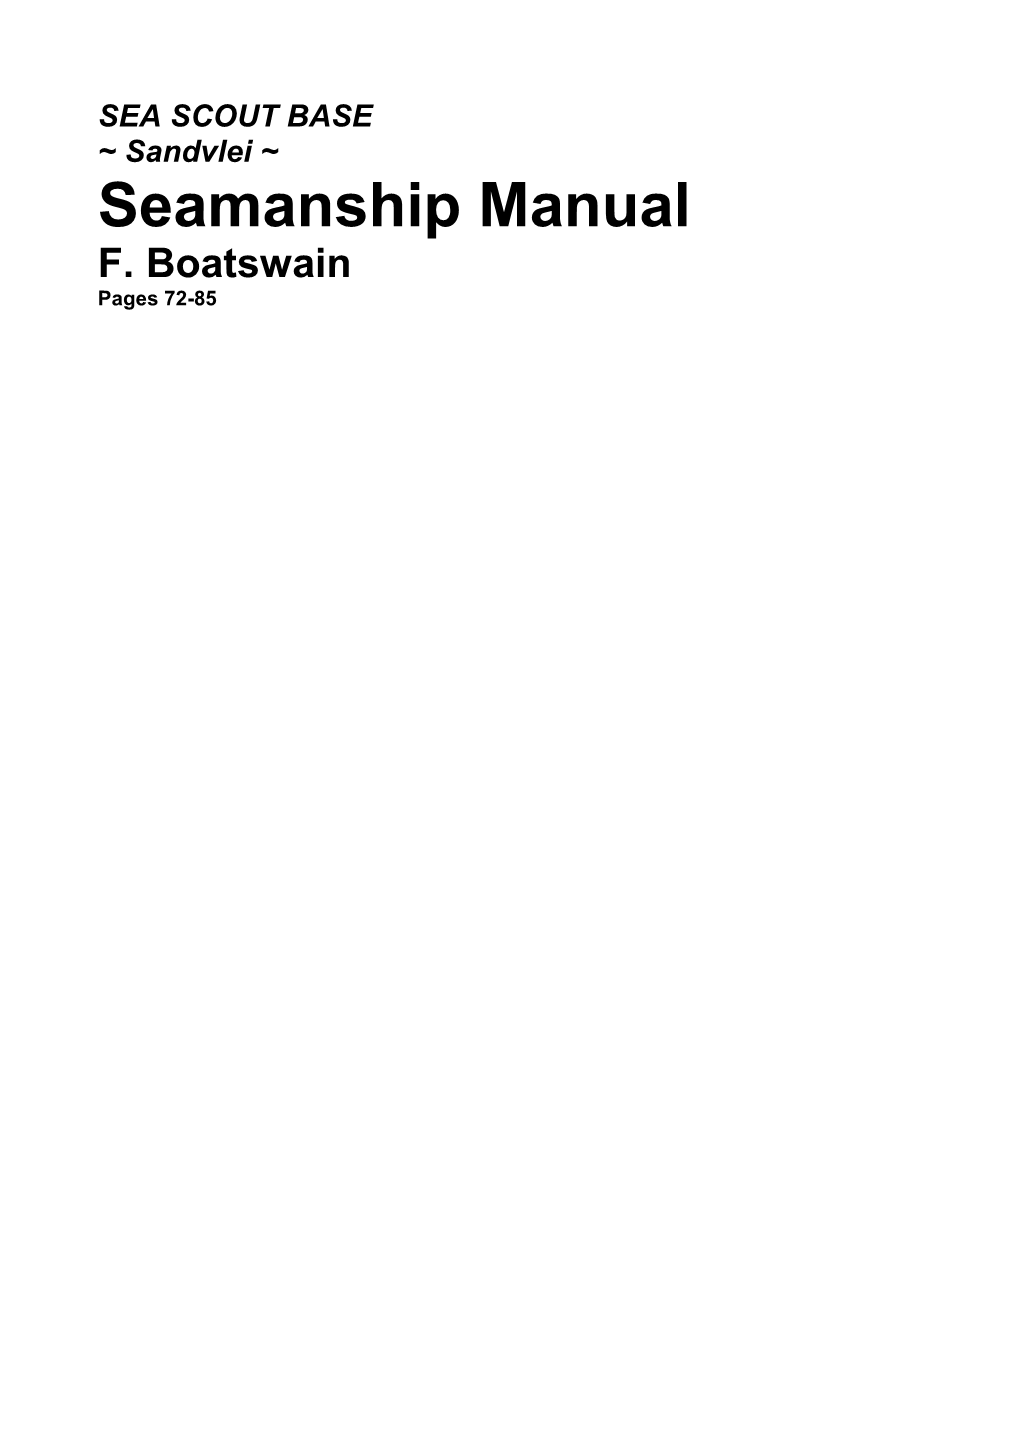 Seamanship Manual F